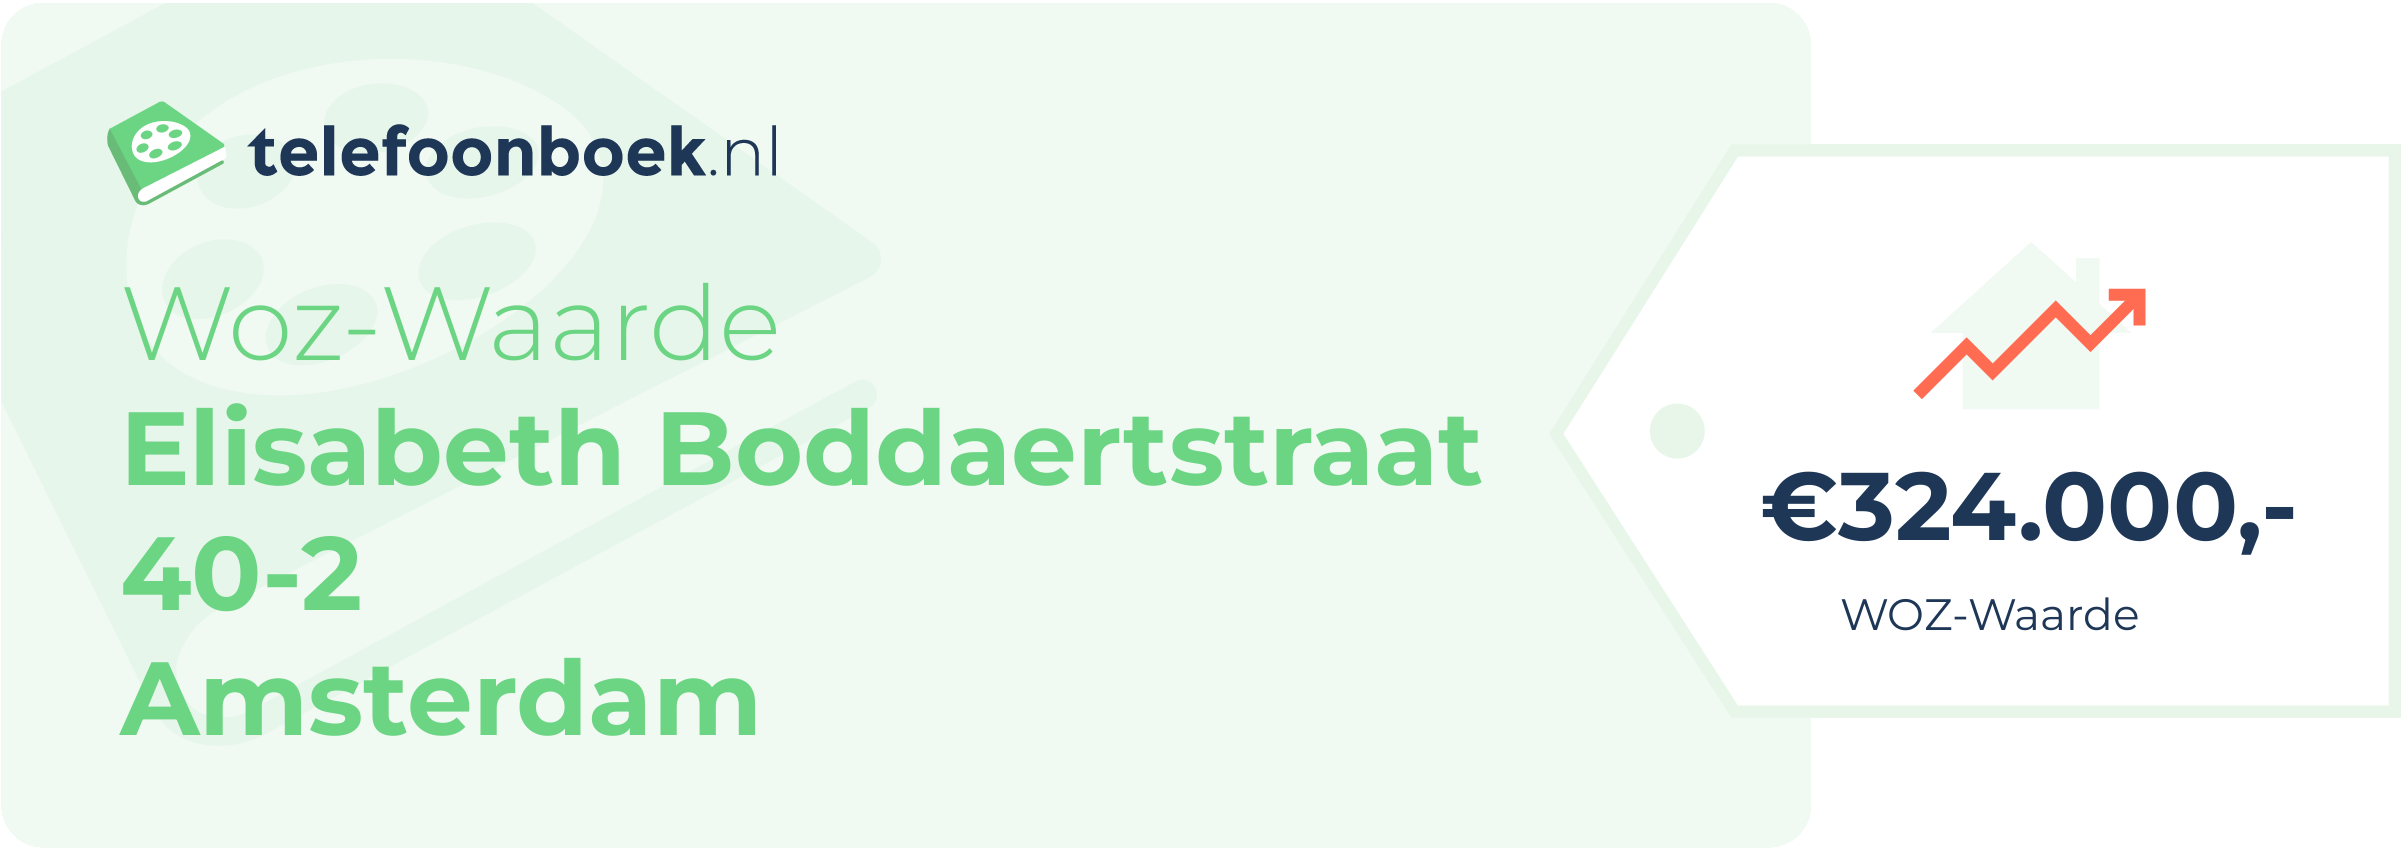 WOZ-waarde Elisabeth Boddaertstraat 40-2 Amsterdam